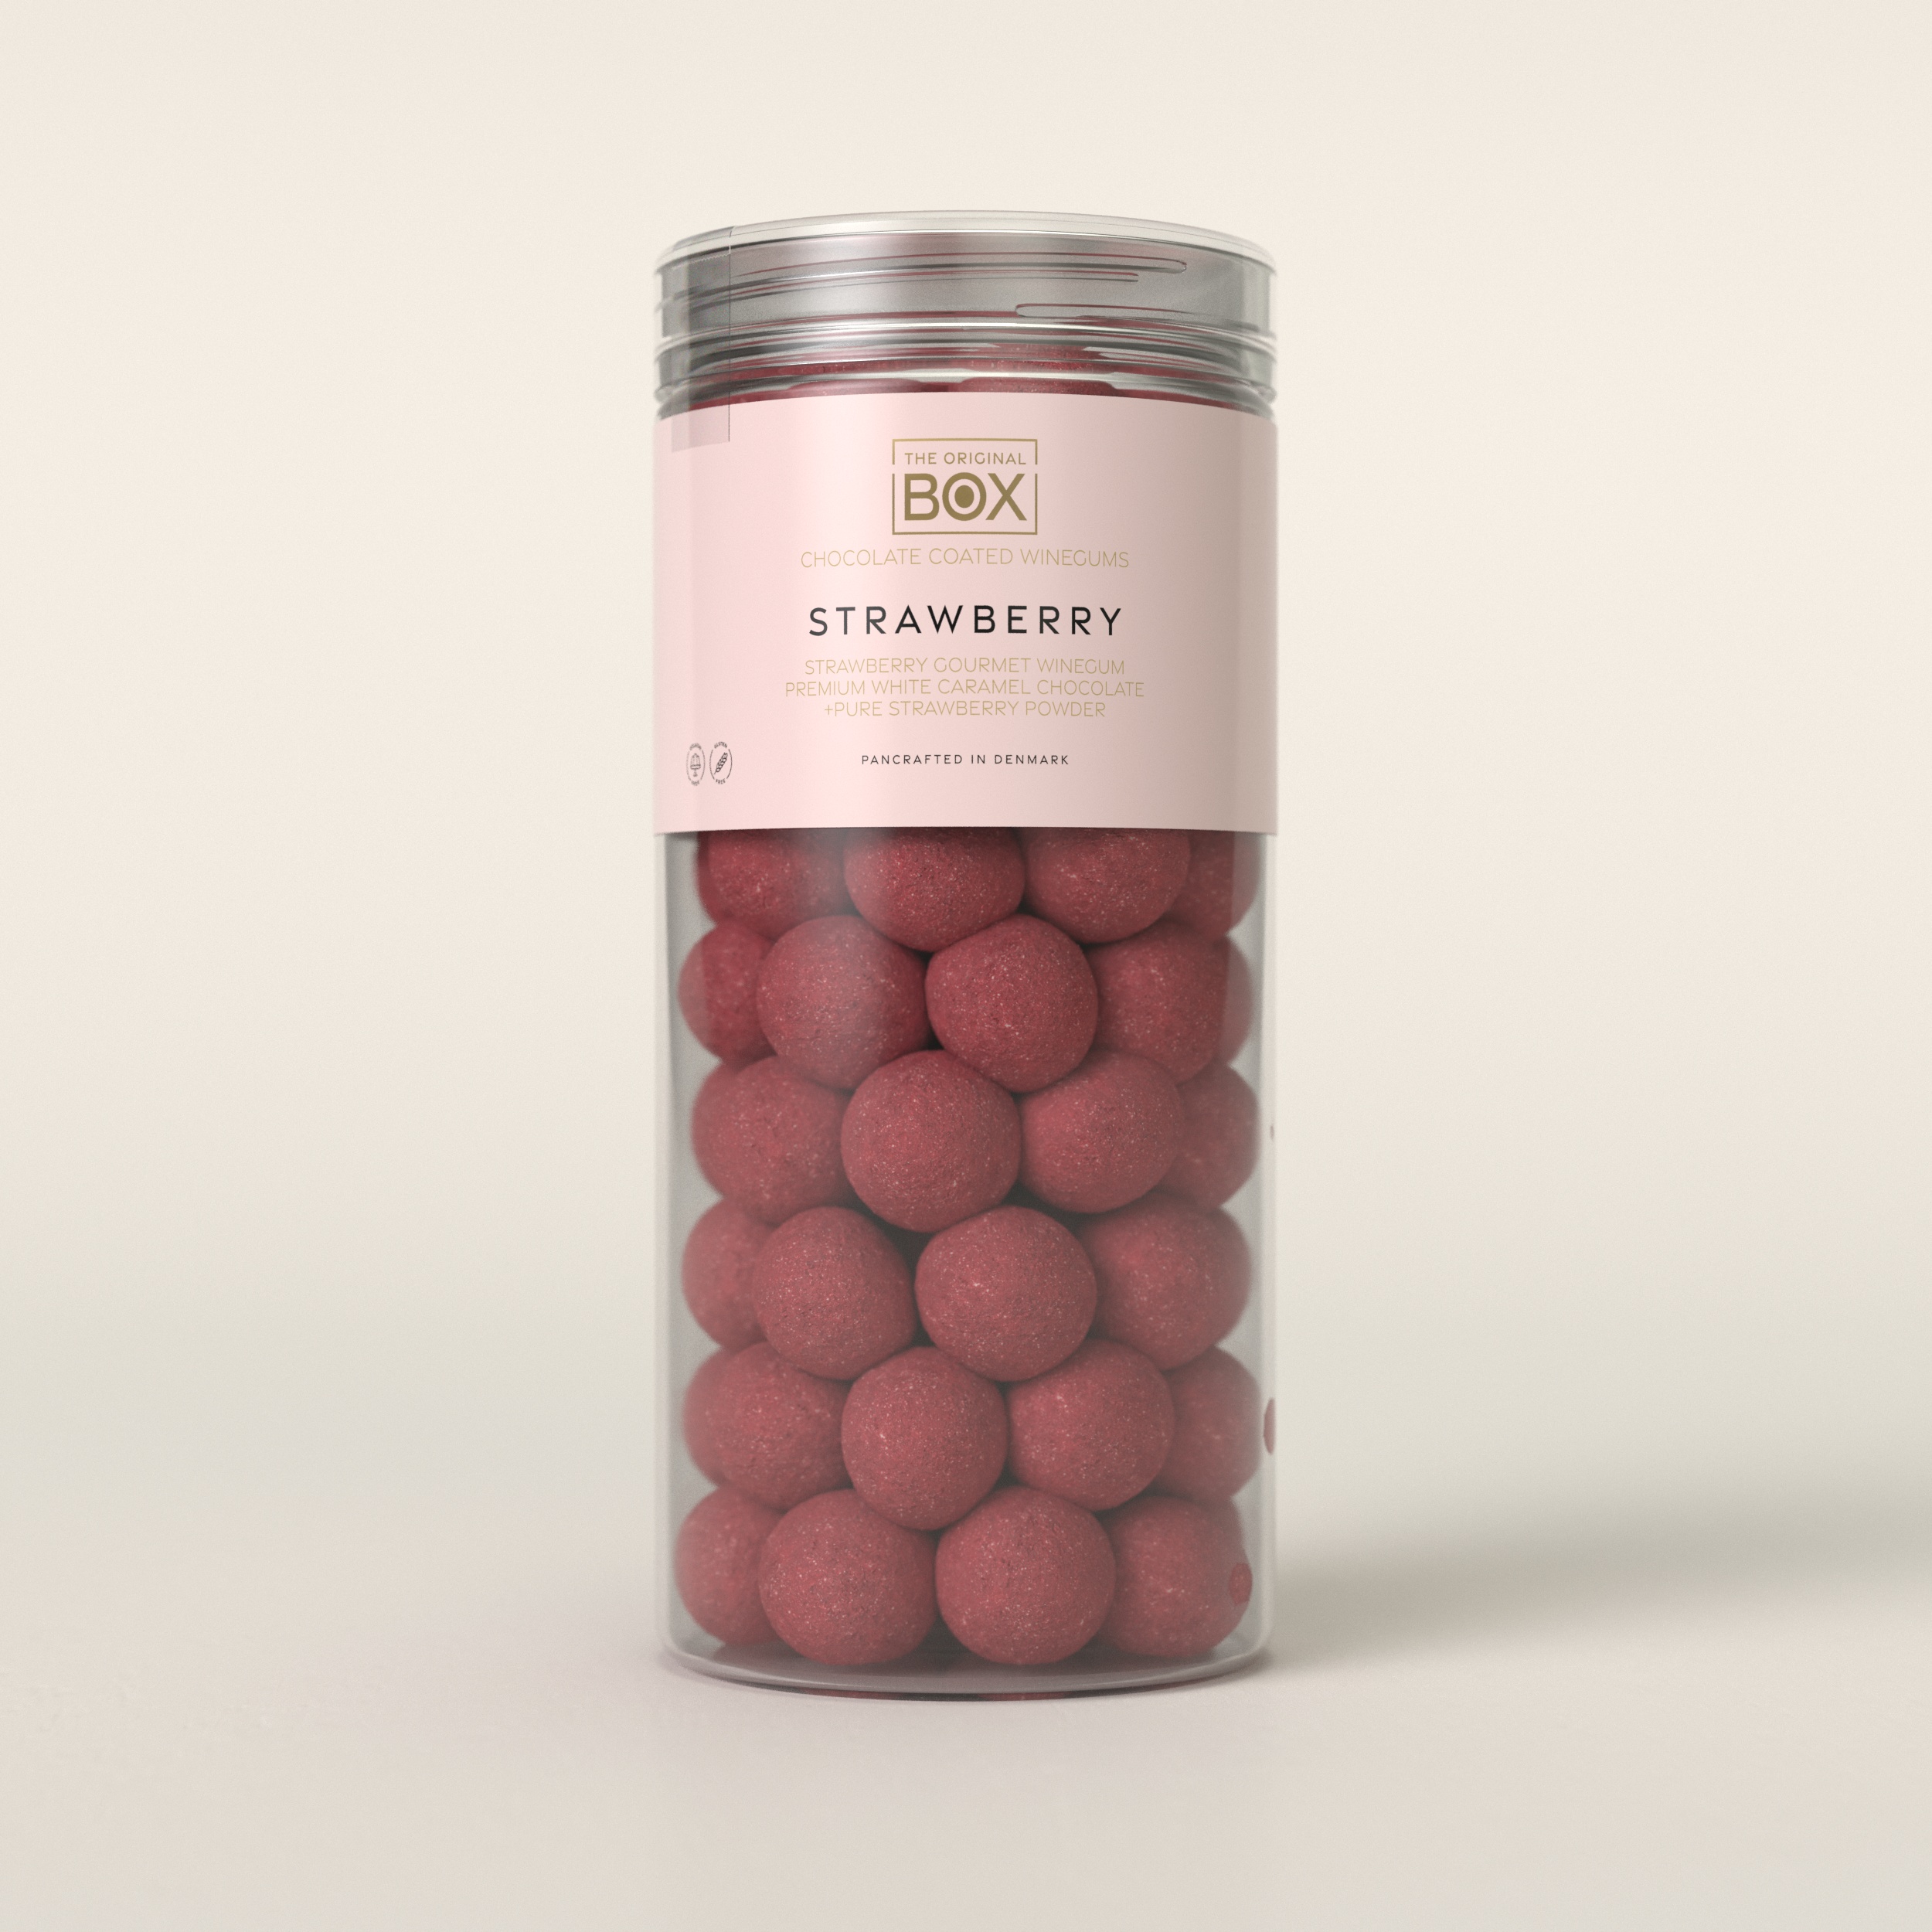 The Box - Stawberry Winegum 250g